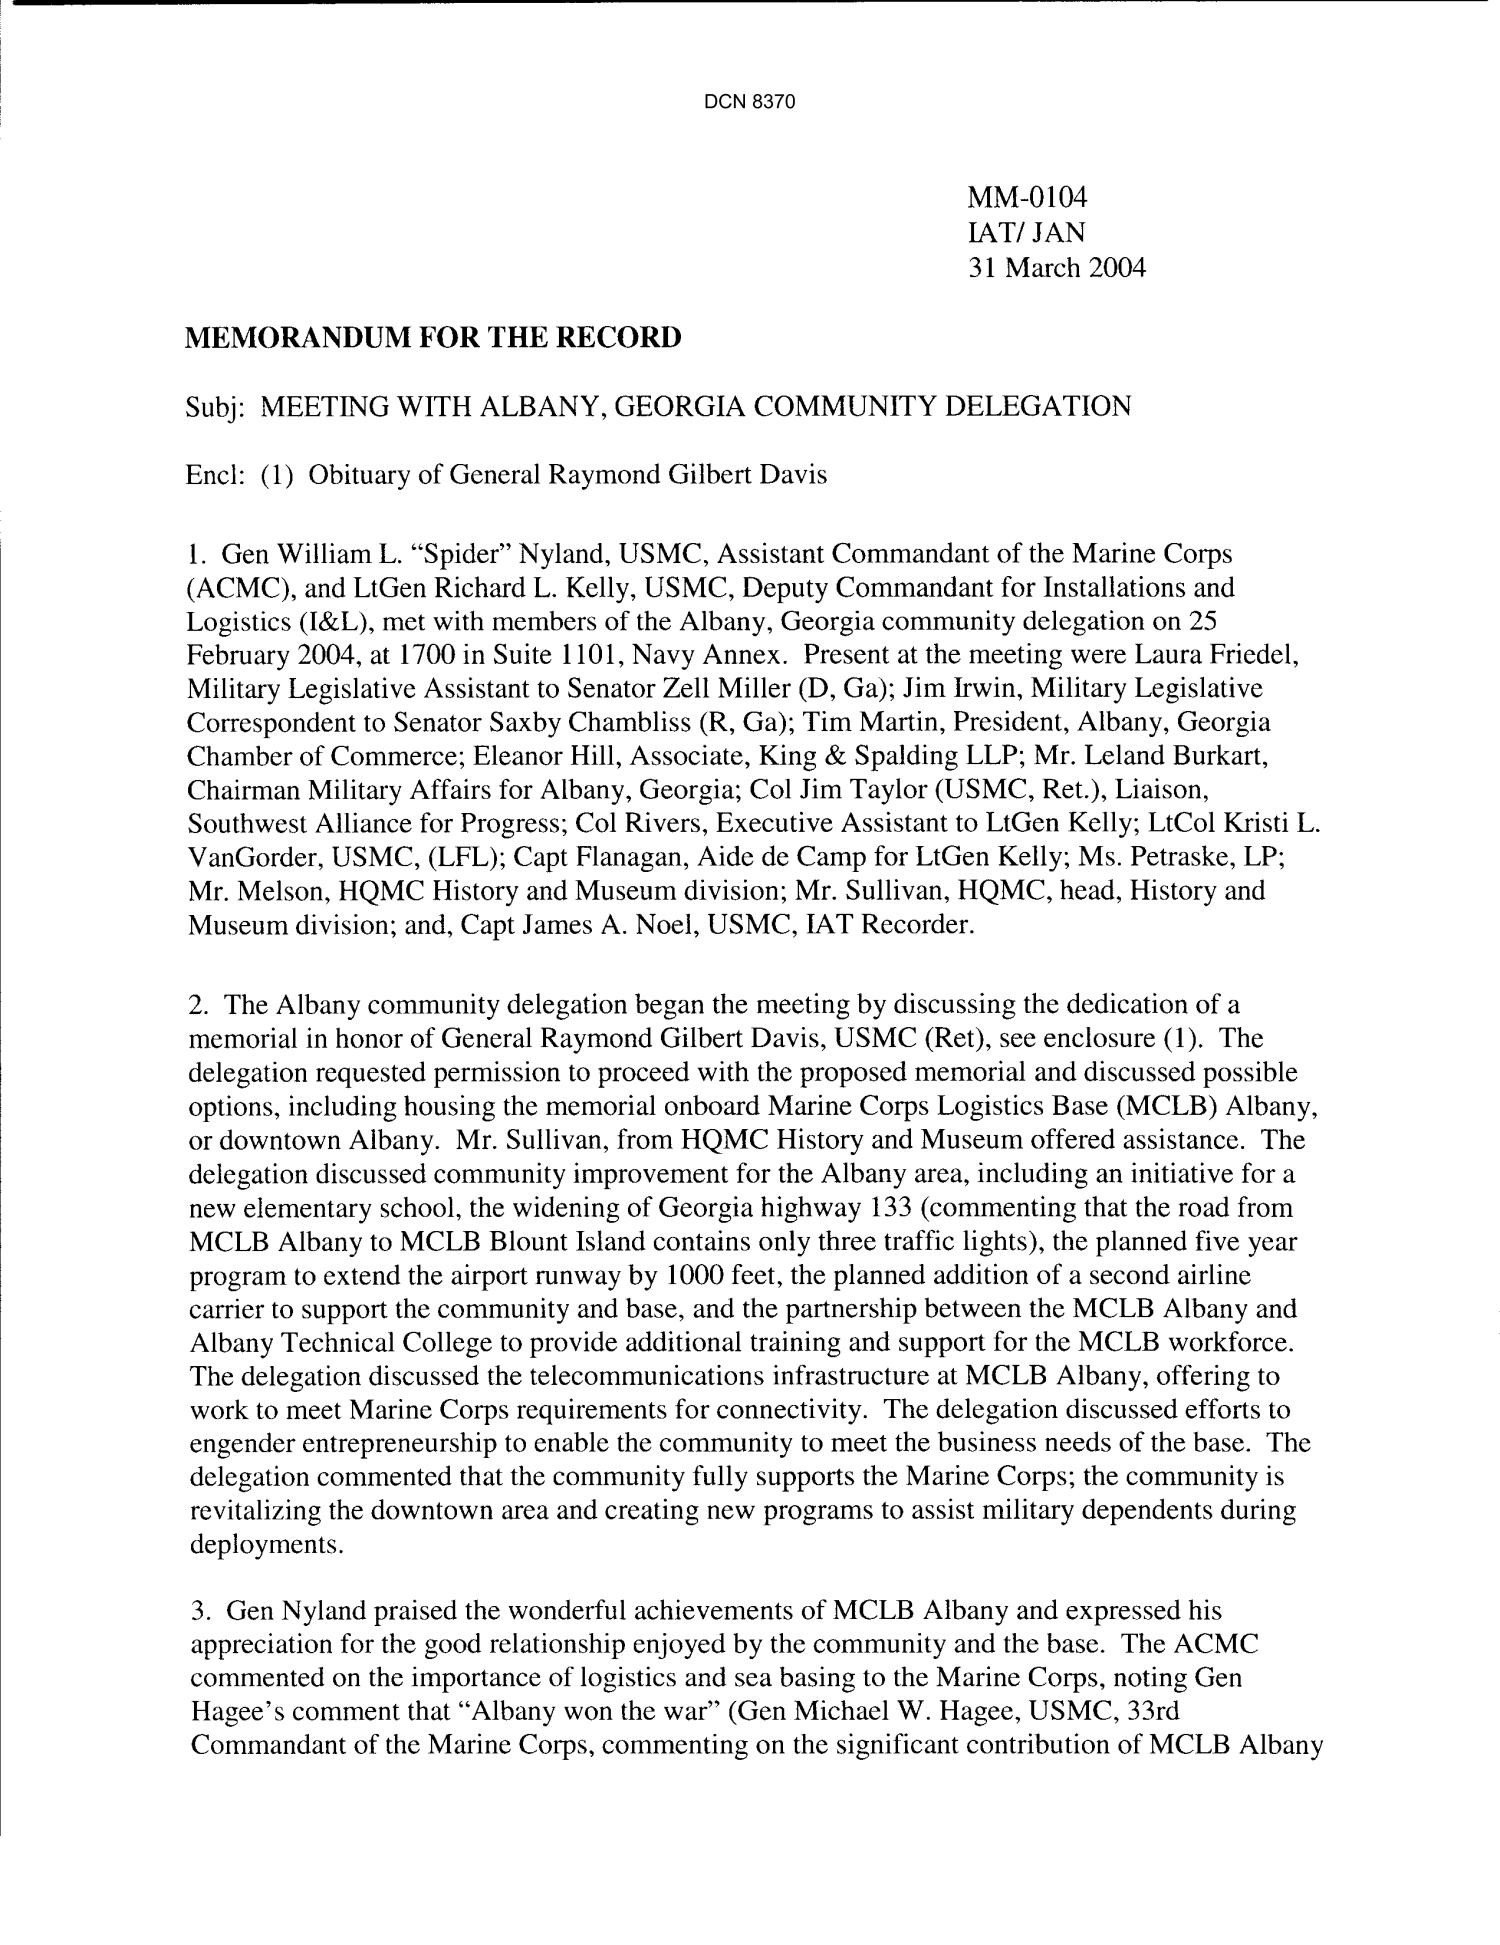 Department of the Navy Memorandum for the Record